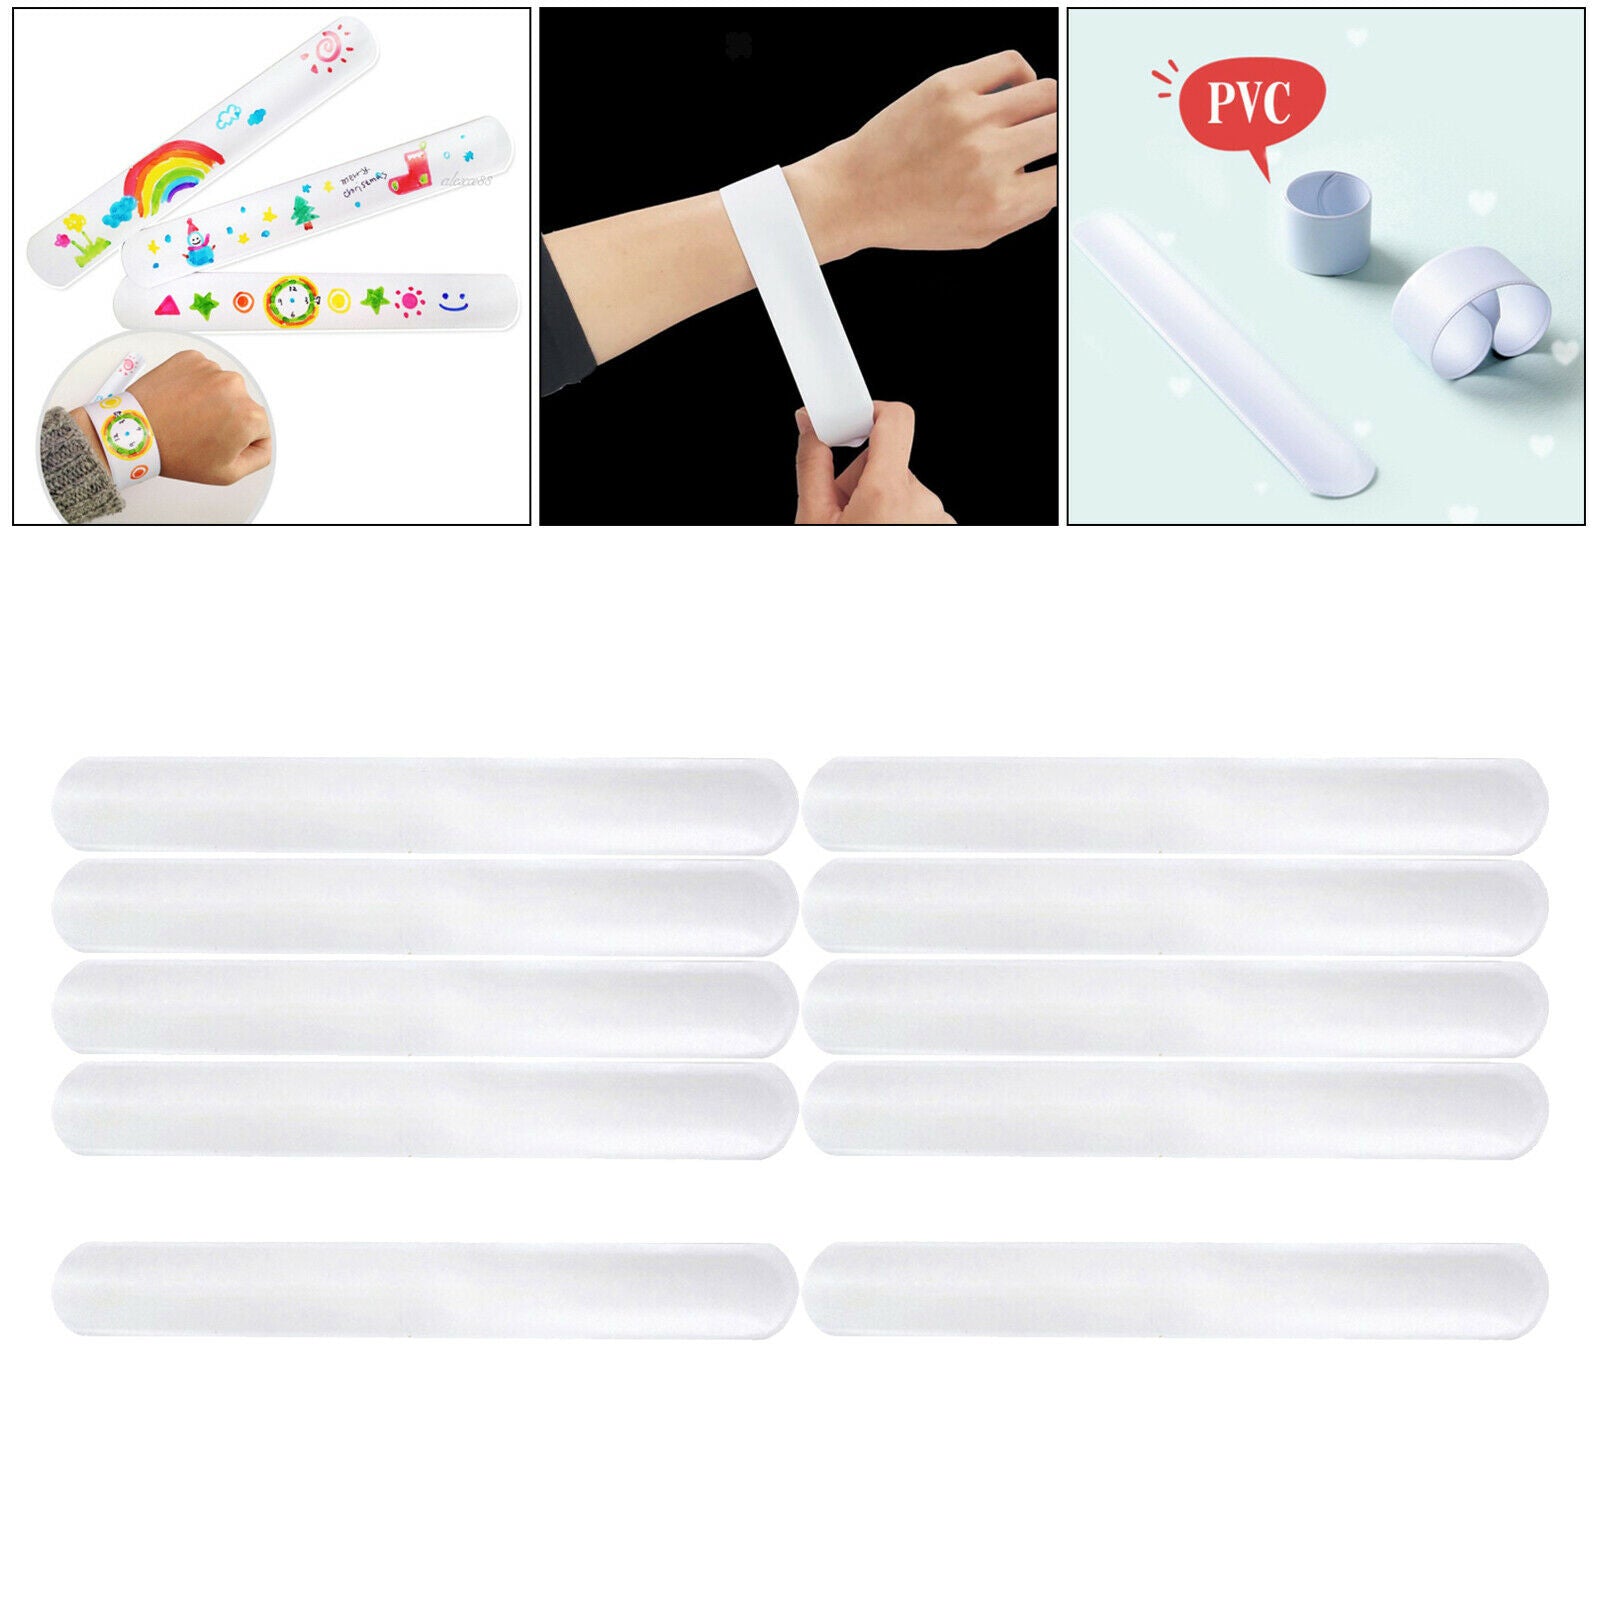 10 Pack White Slap Bracelet Band Painting Pat for Kids DIY Gift Birthday Party